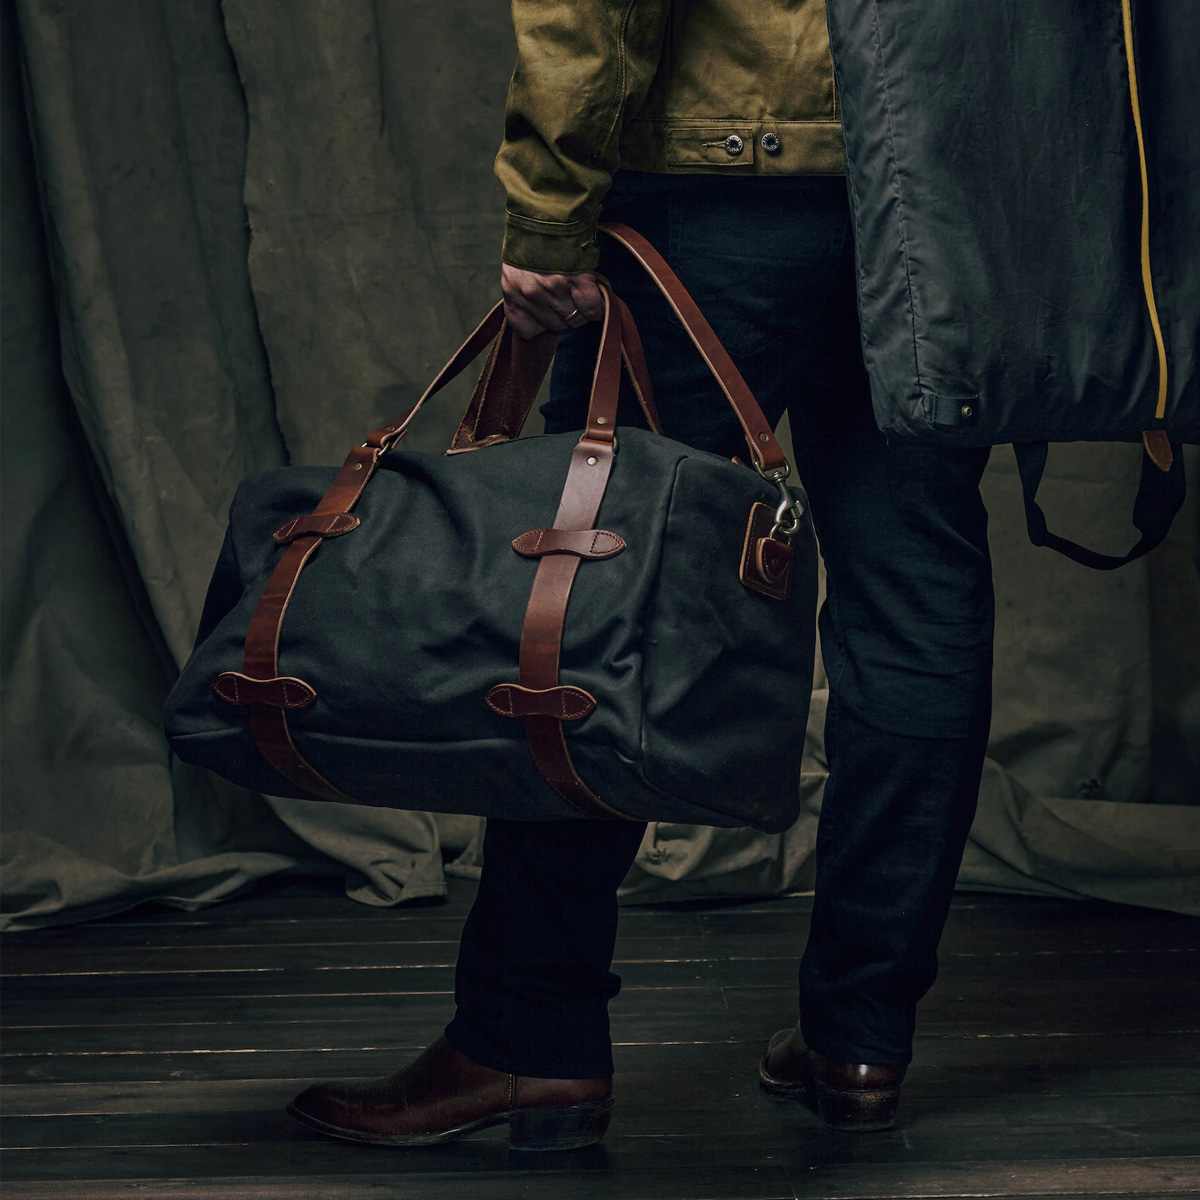 Filson Traveller Medium Duffle Bag Stapleton Cinder, a proven icon redesigned in collaboration with songwriter Chris Stapleton